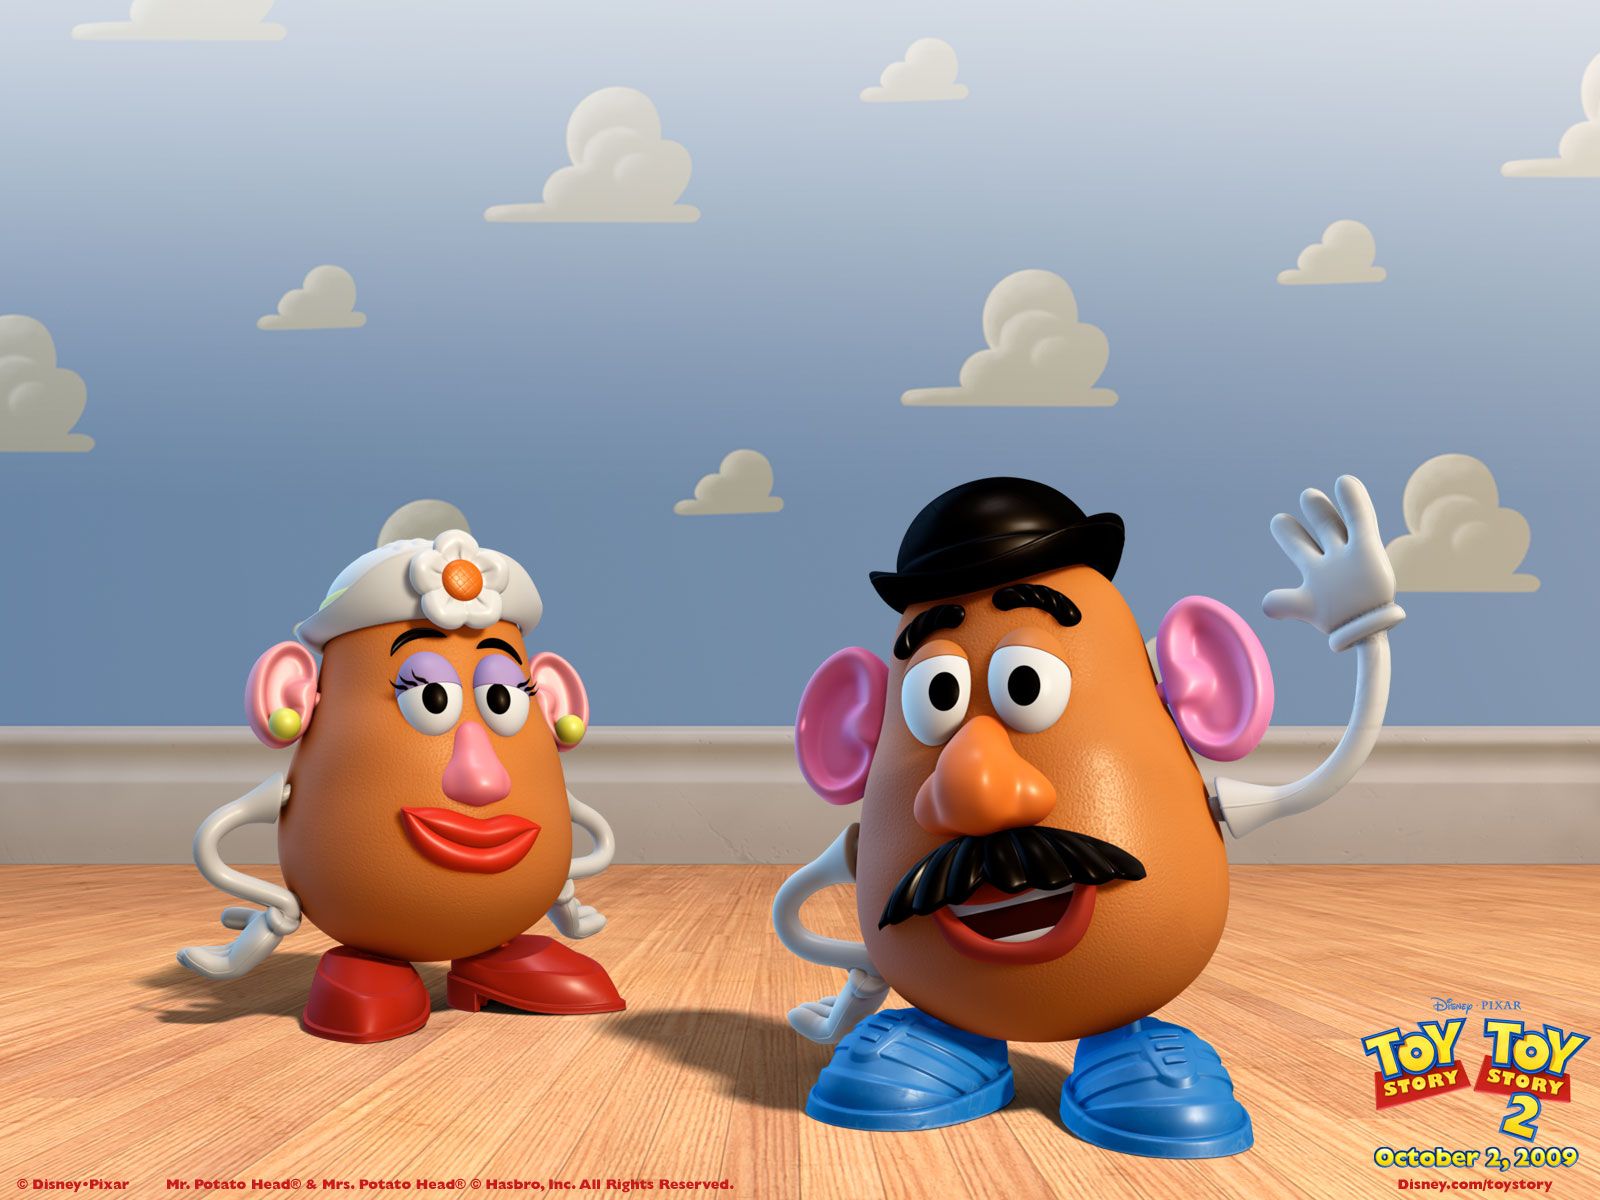 Mr. Potato Head screenshots, image and picture